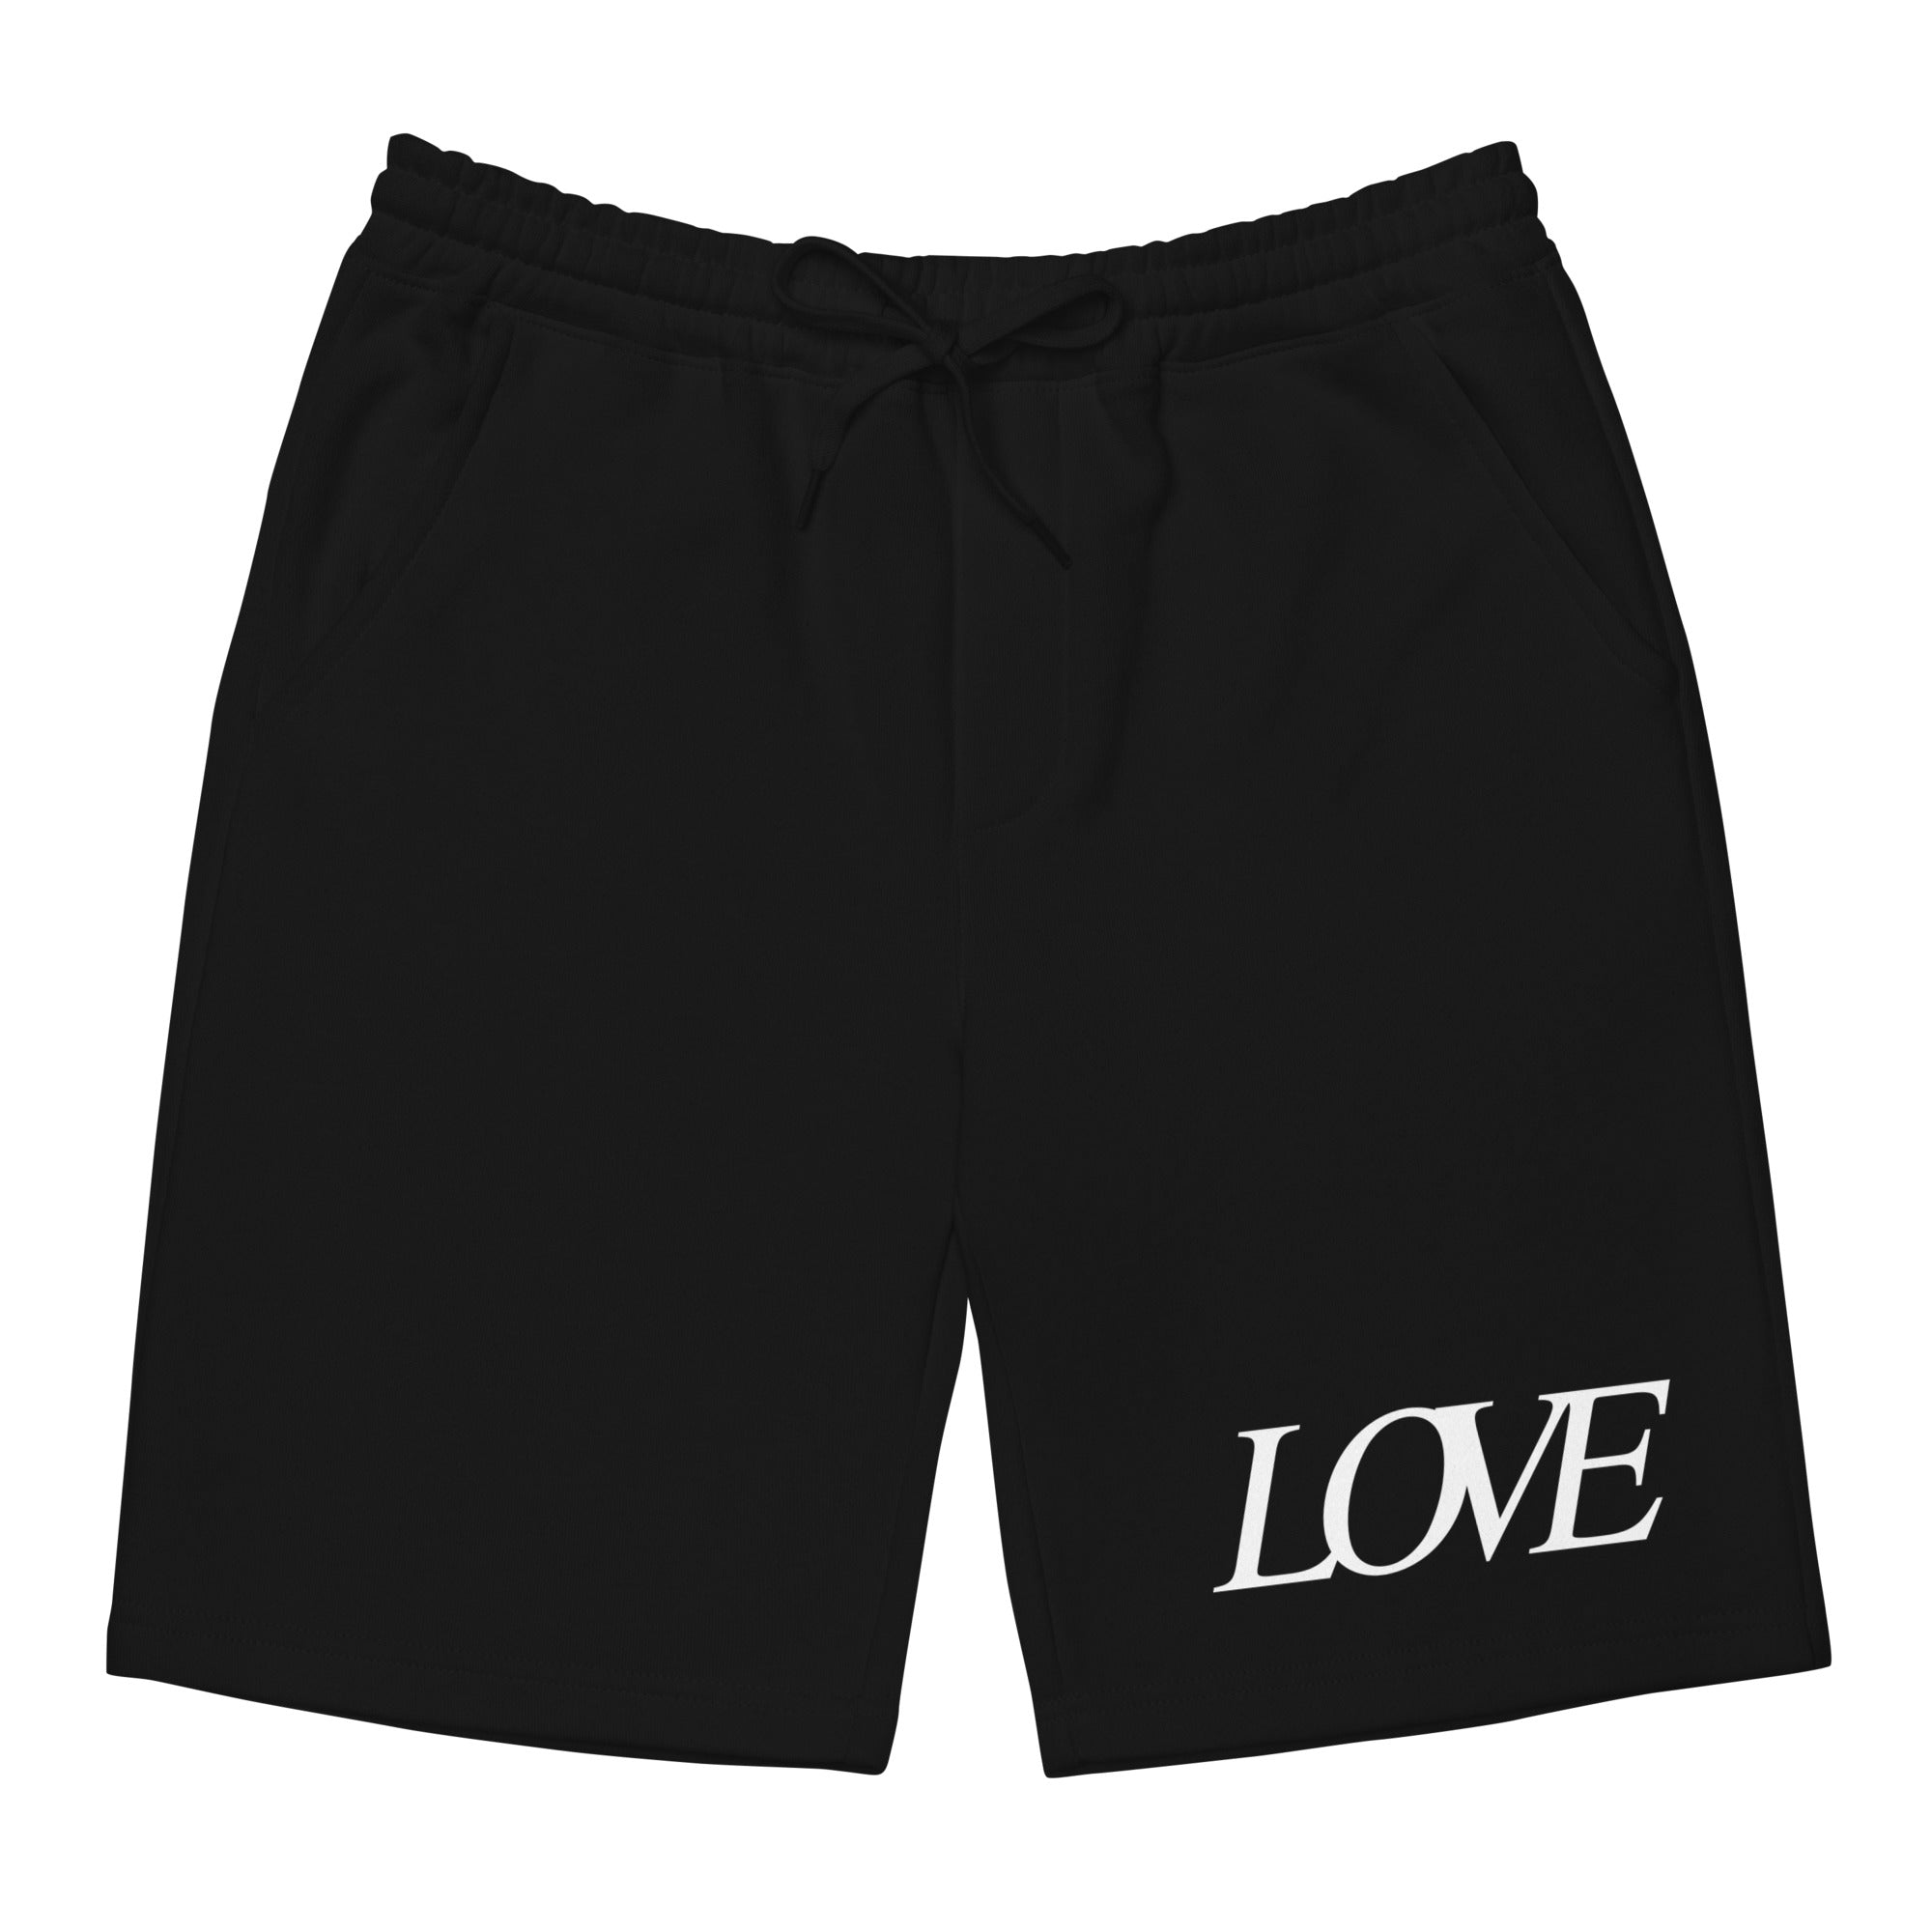 Classic LOVE Shorts